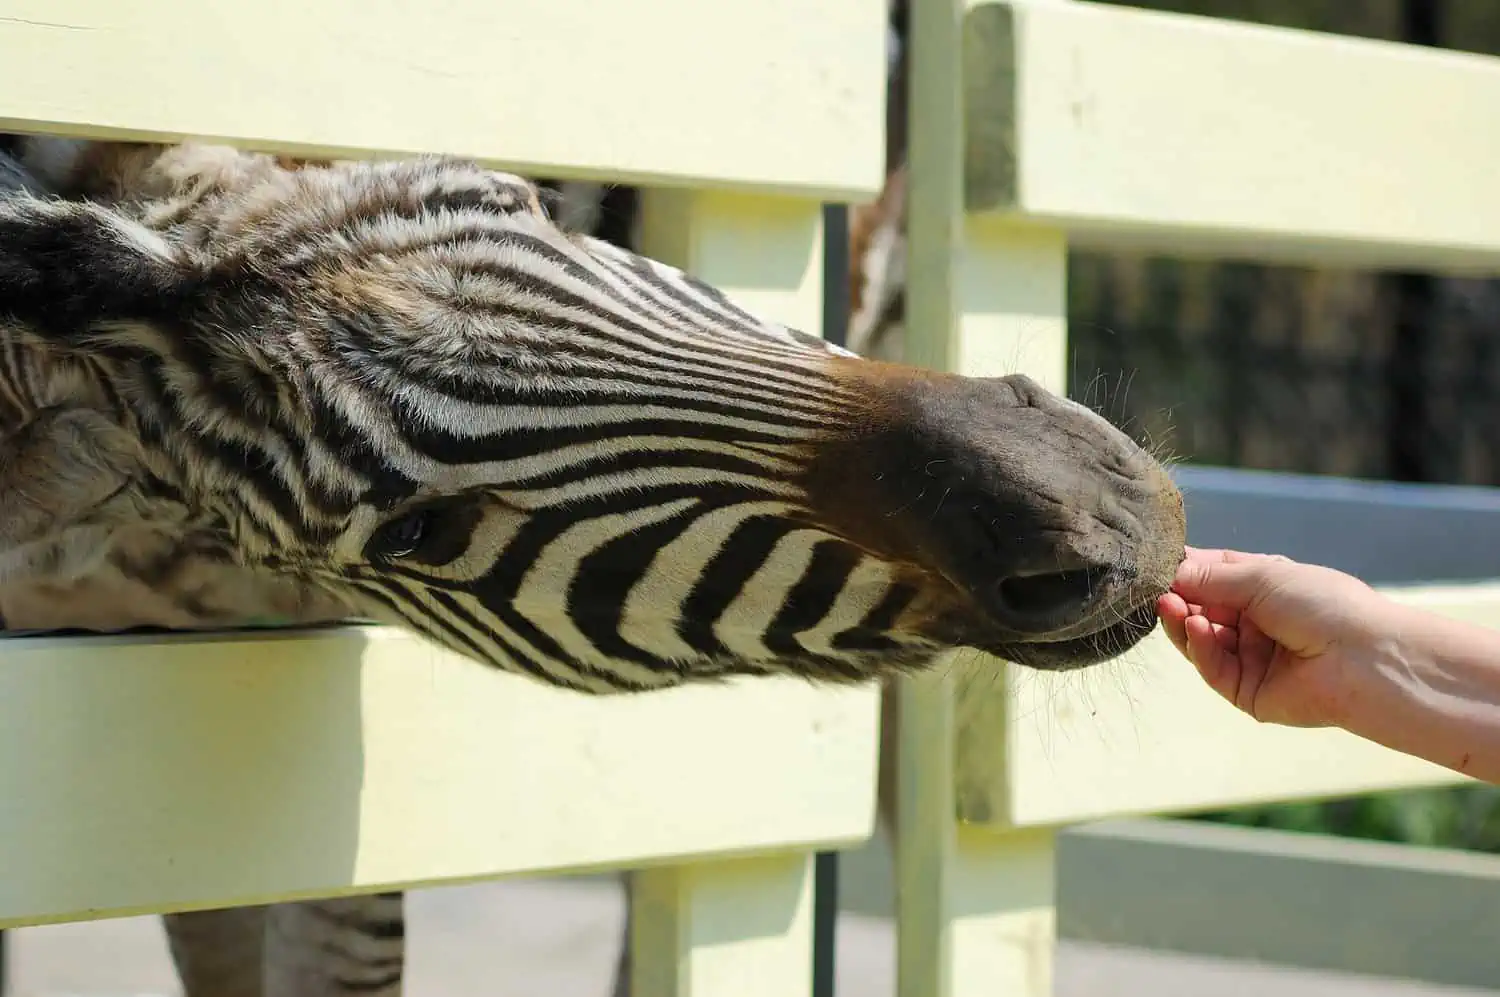 Zebra being fed in the zoo